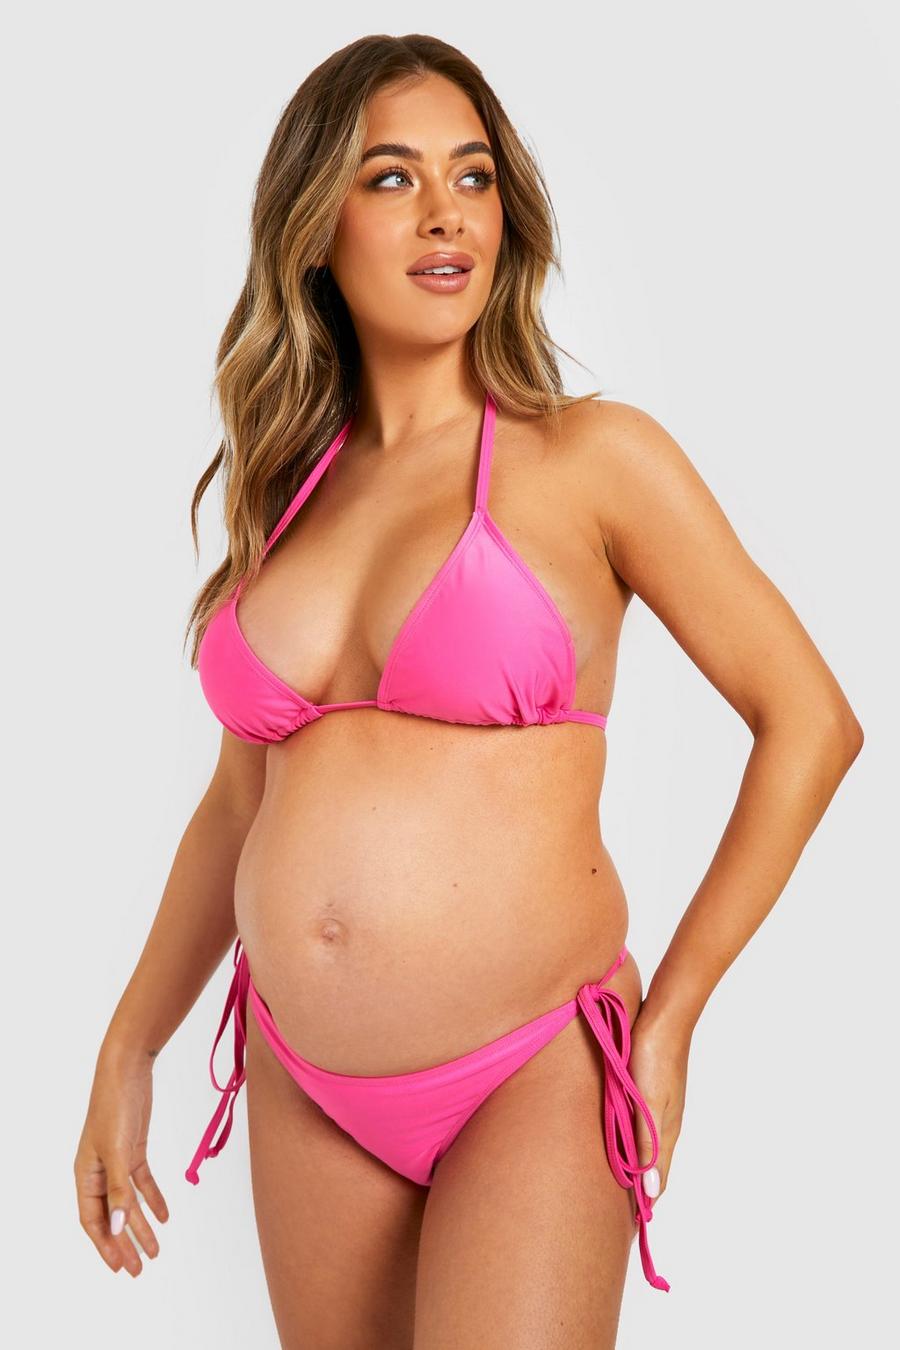 Women Maternity Suspender Soild Pink Swimsuit Pregnancy One-piece Swimwear  Swimsuit For Pregnant Woman Bikini Plus Size Cover Up - AliExpress